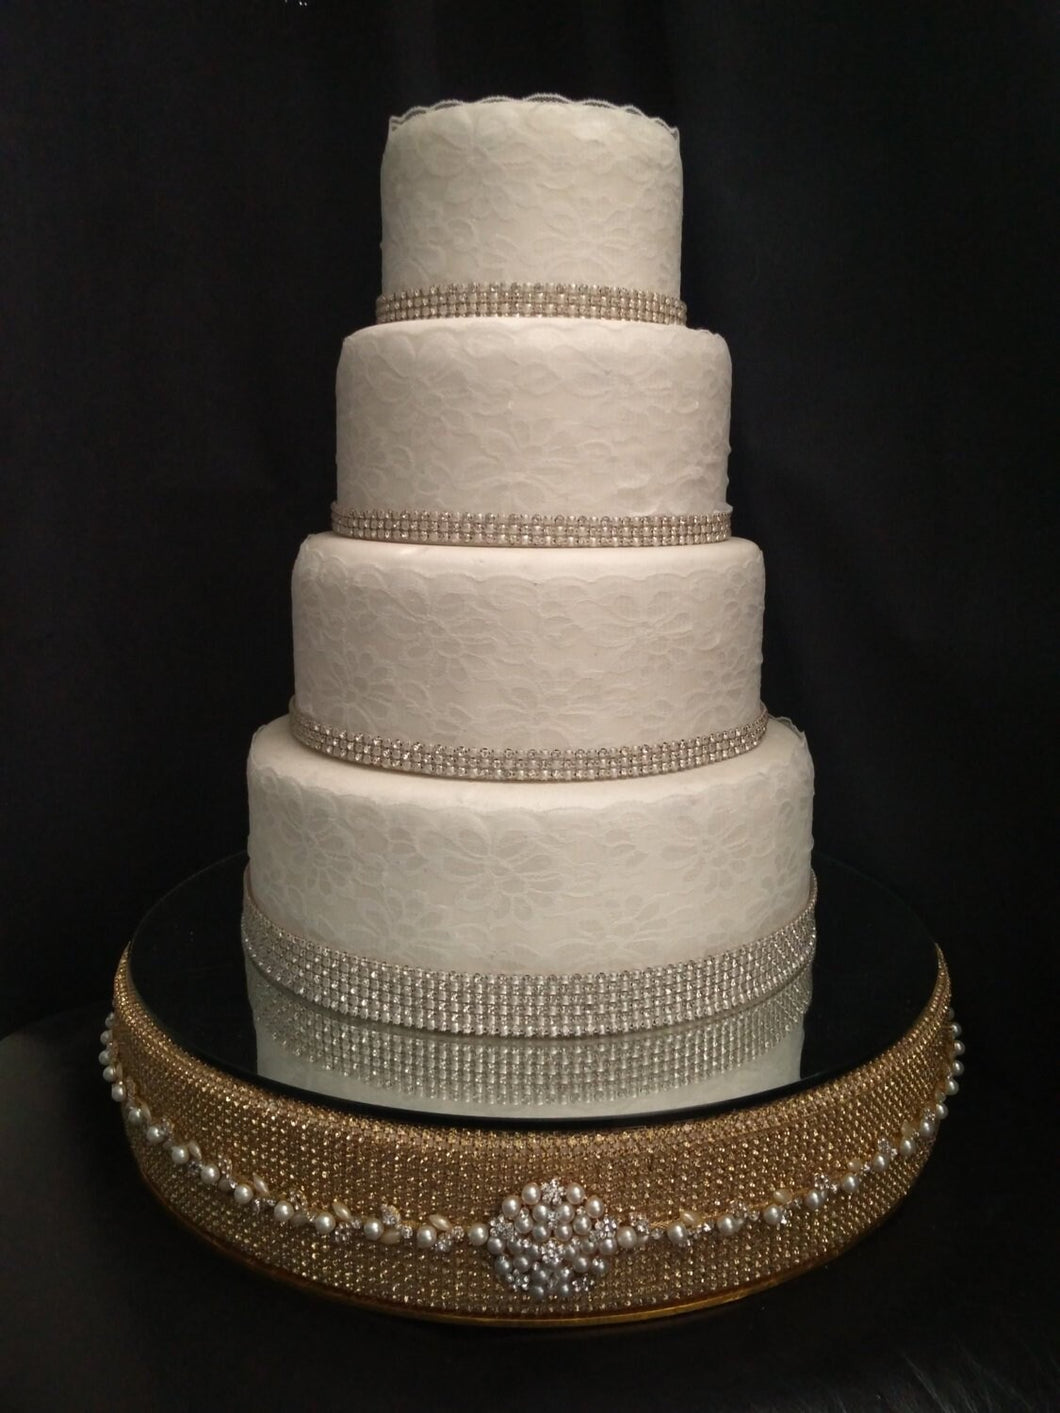 Gold Crystal Diamante rhinestone  pearl belt style wedding cake stand by Crystal wedding uk